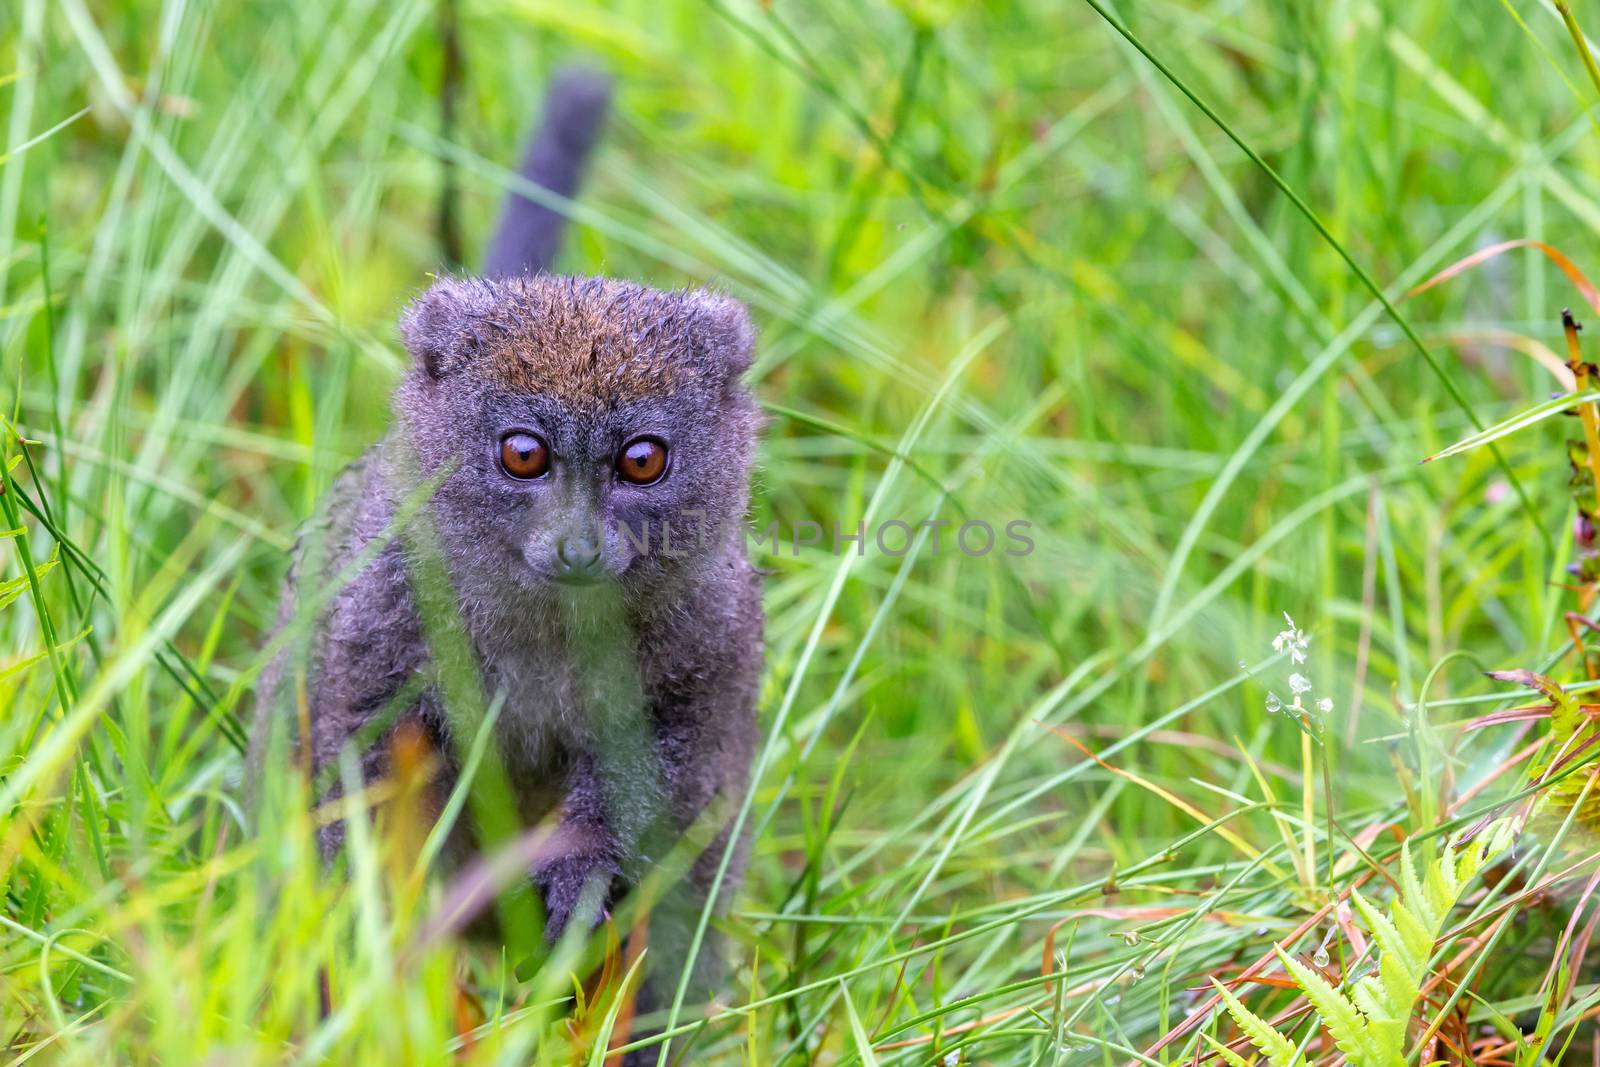 A bamboo lemur between the tall grass looks curious by 25ehaag6